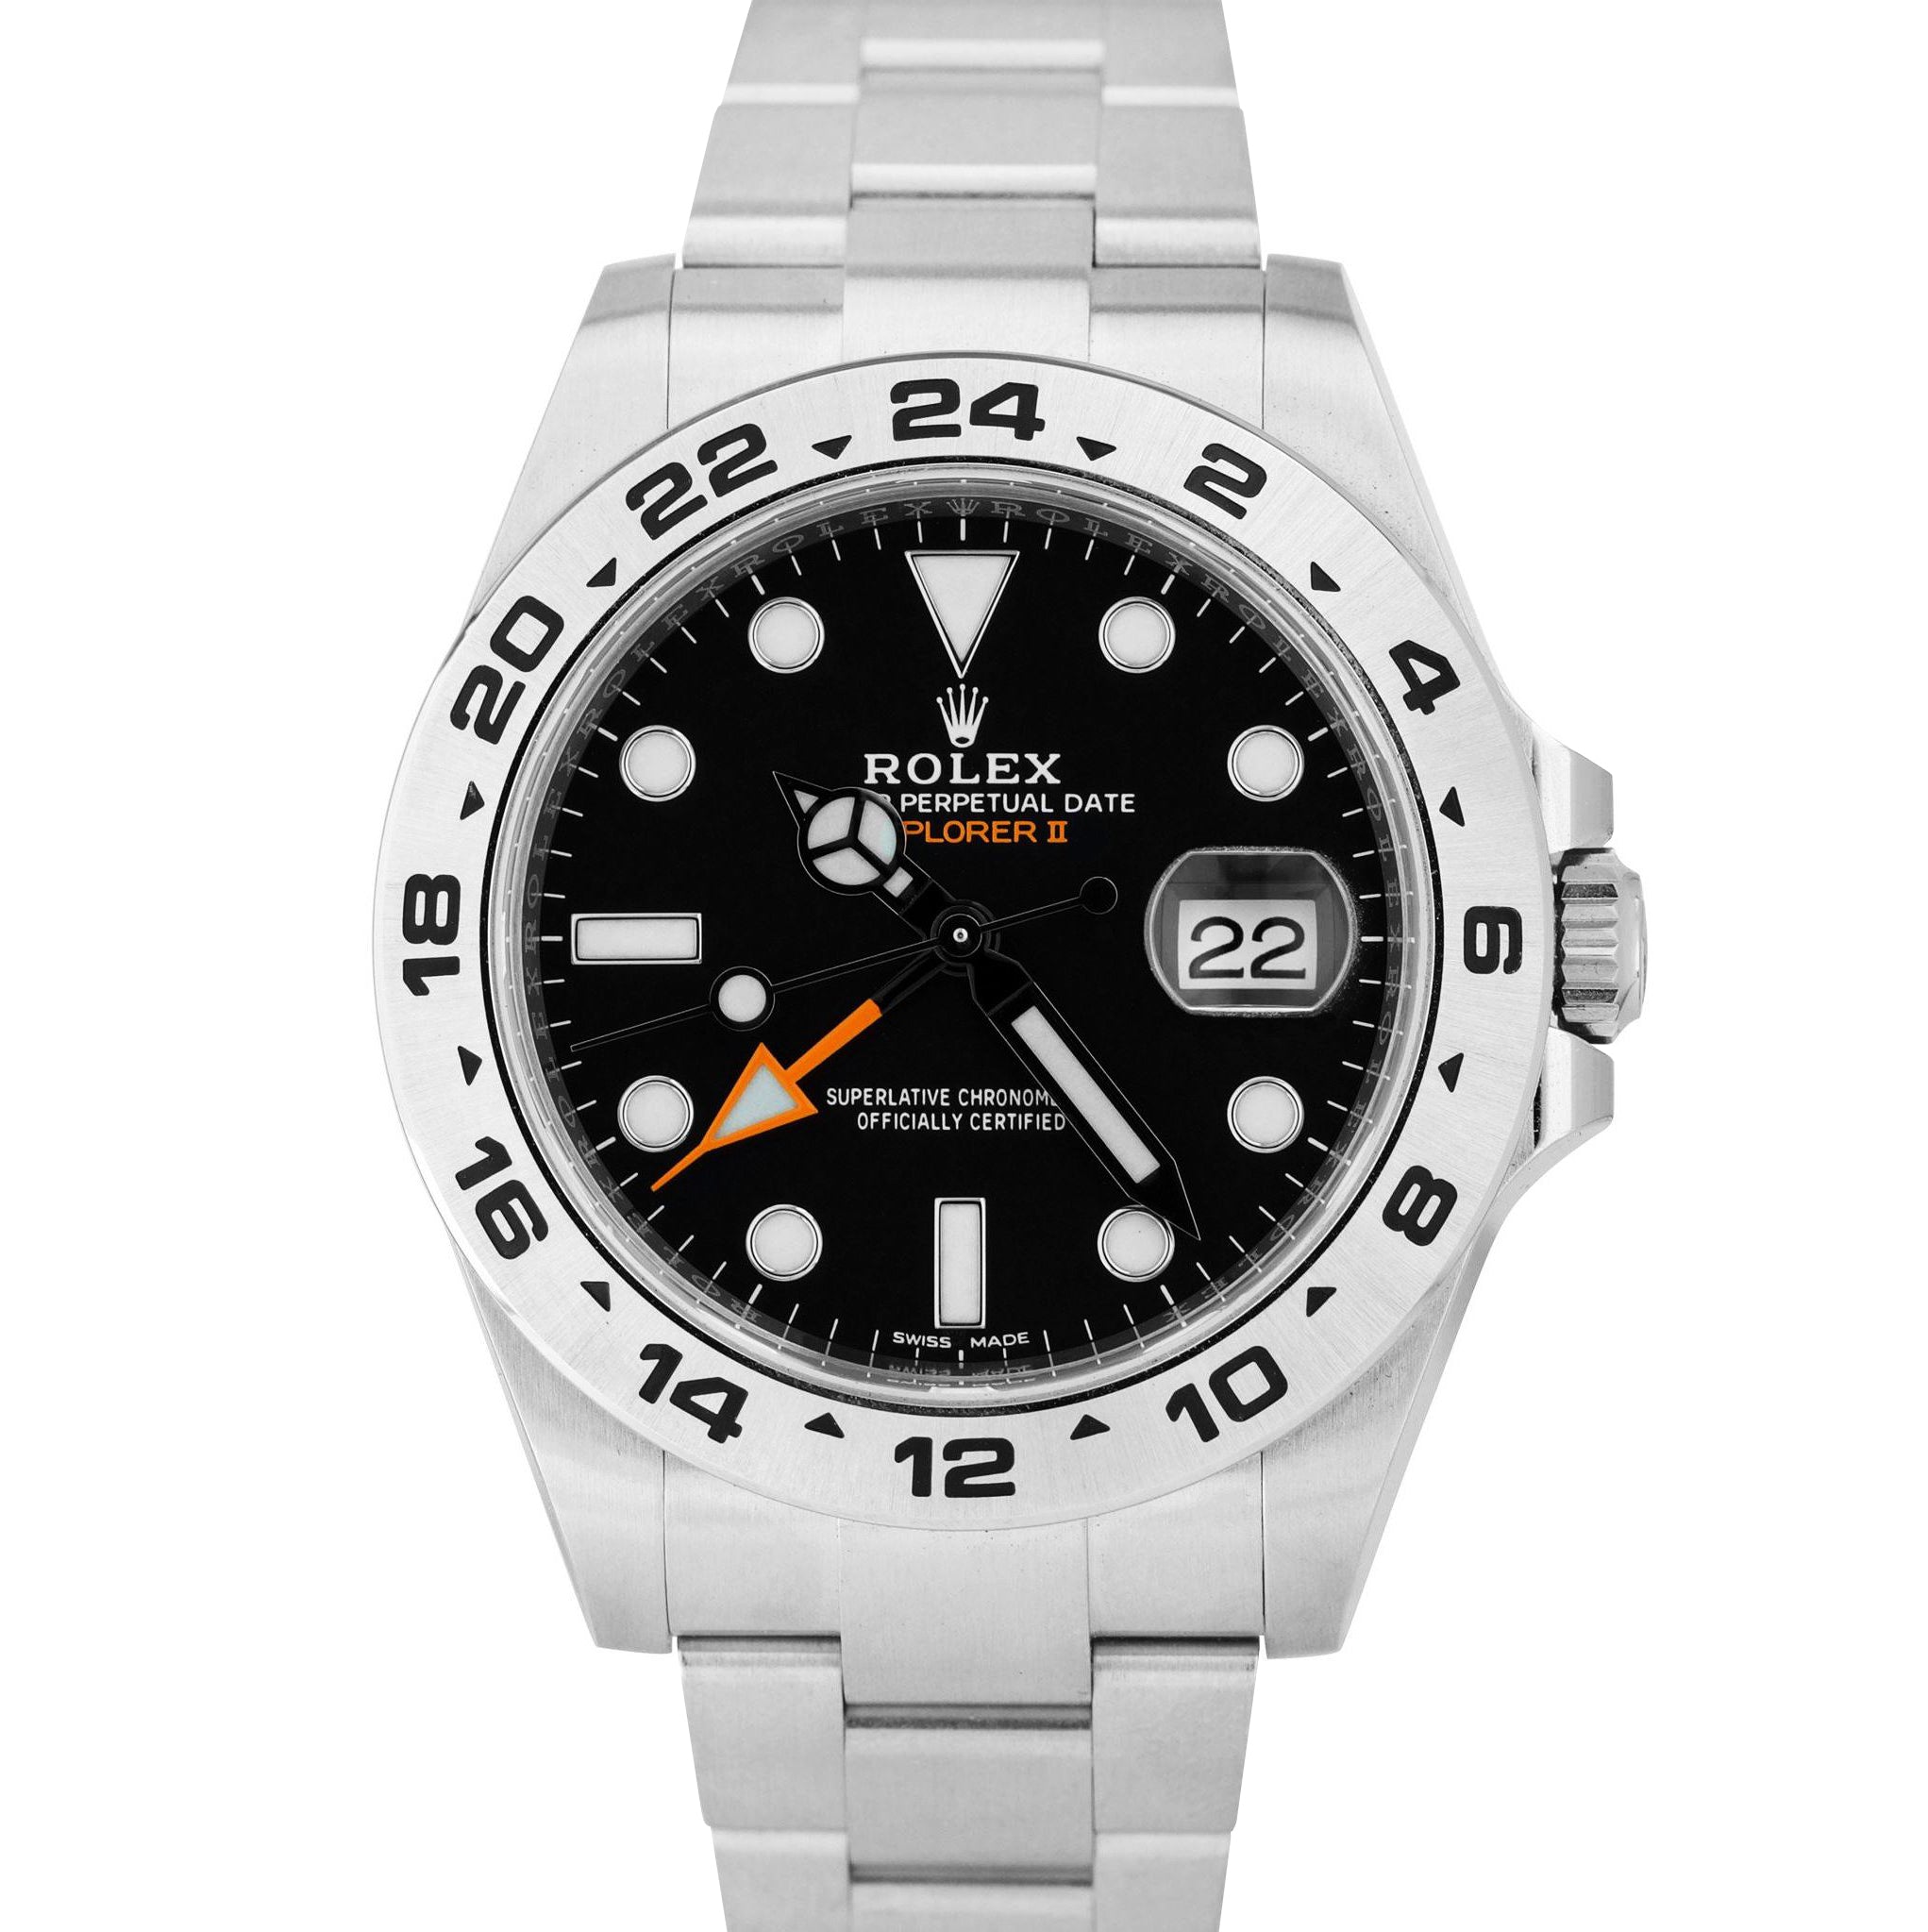 BRAND NEW 2021 Rolex Explorer II 42mm Black Orange GMT Date Steel Watch 216570